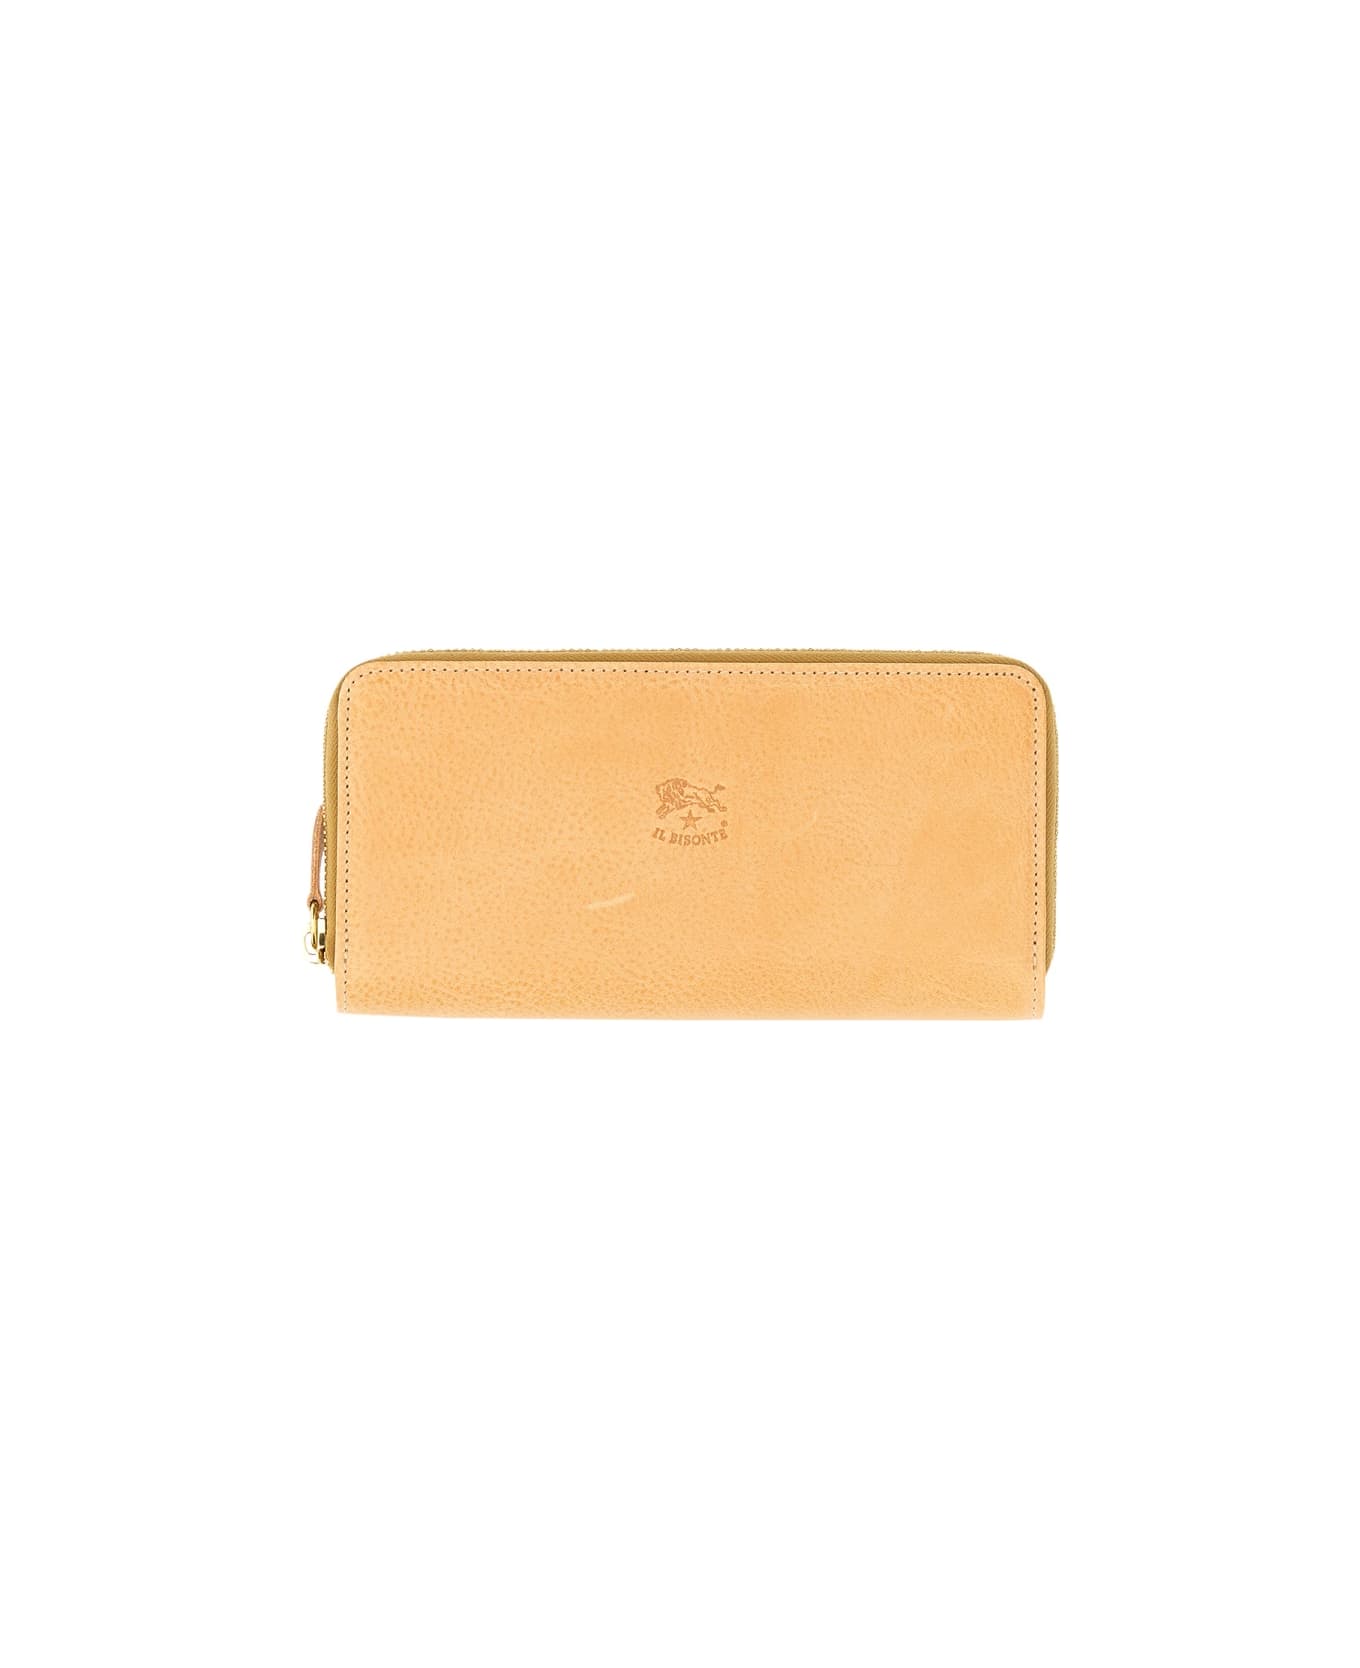 Il Bisonte Zipped Wallet - BEIGE